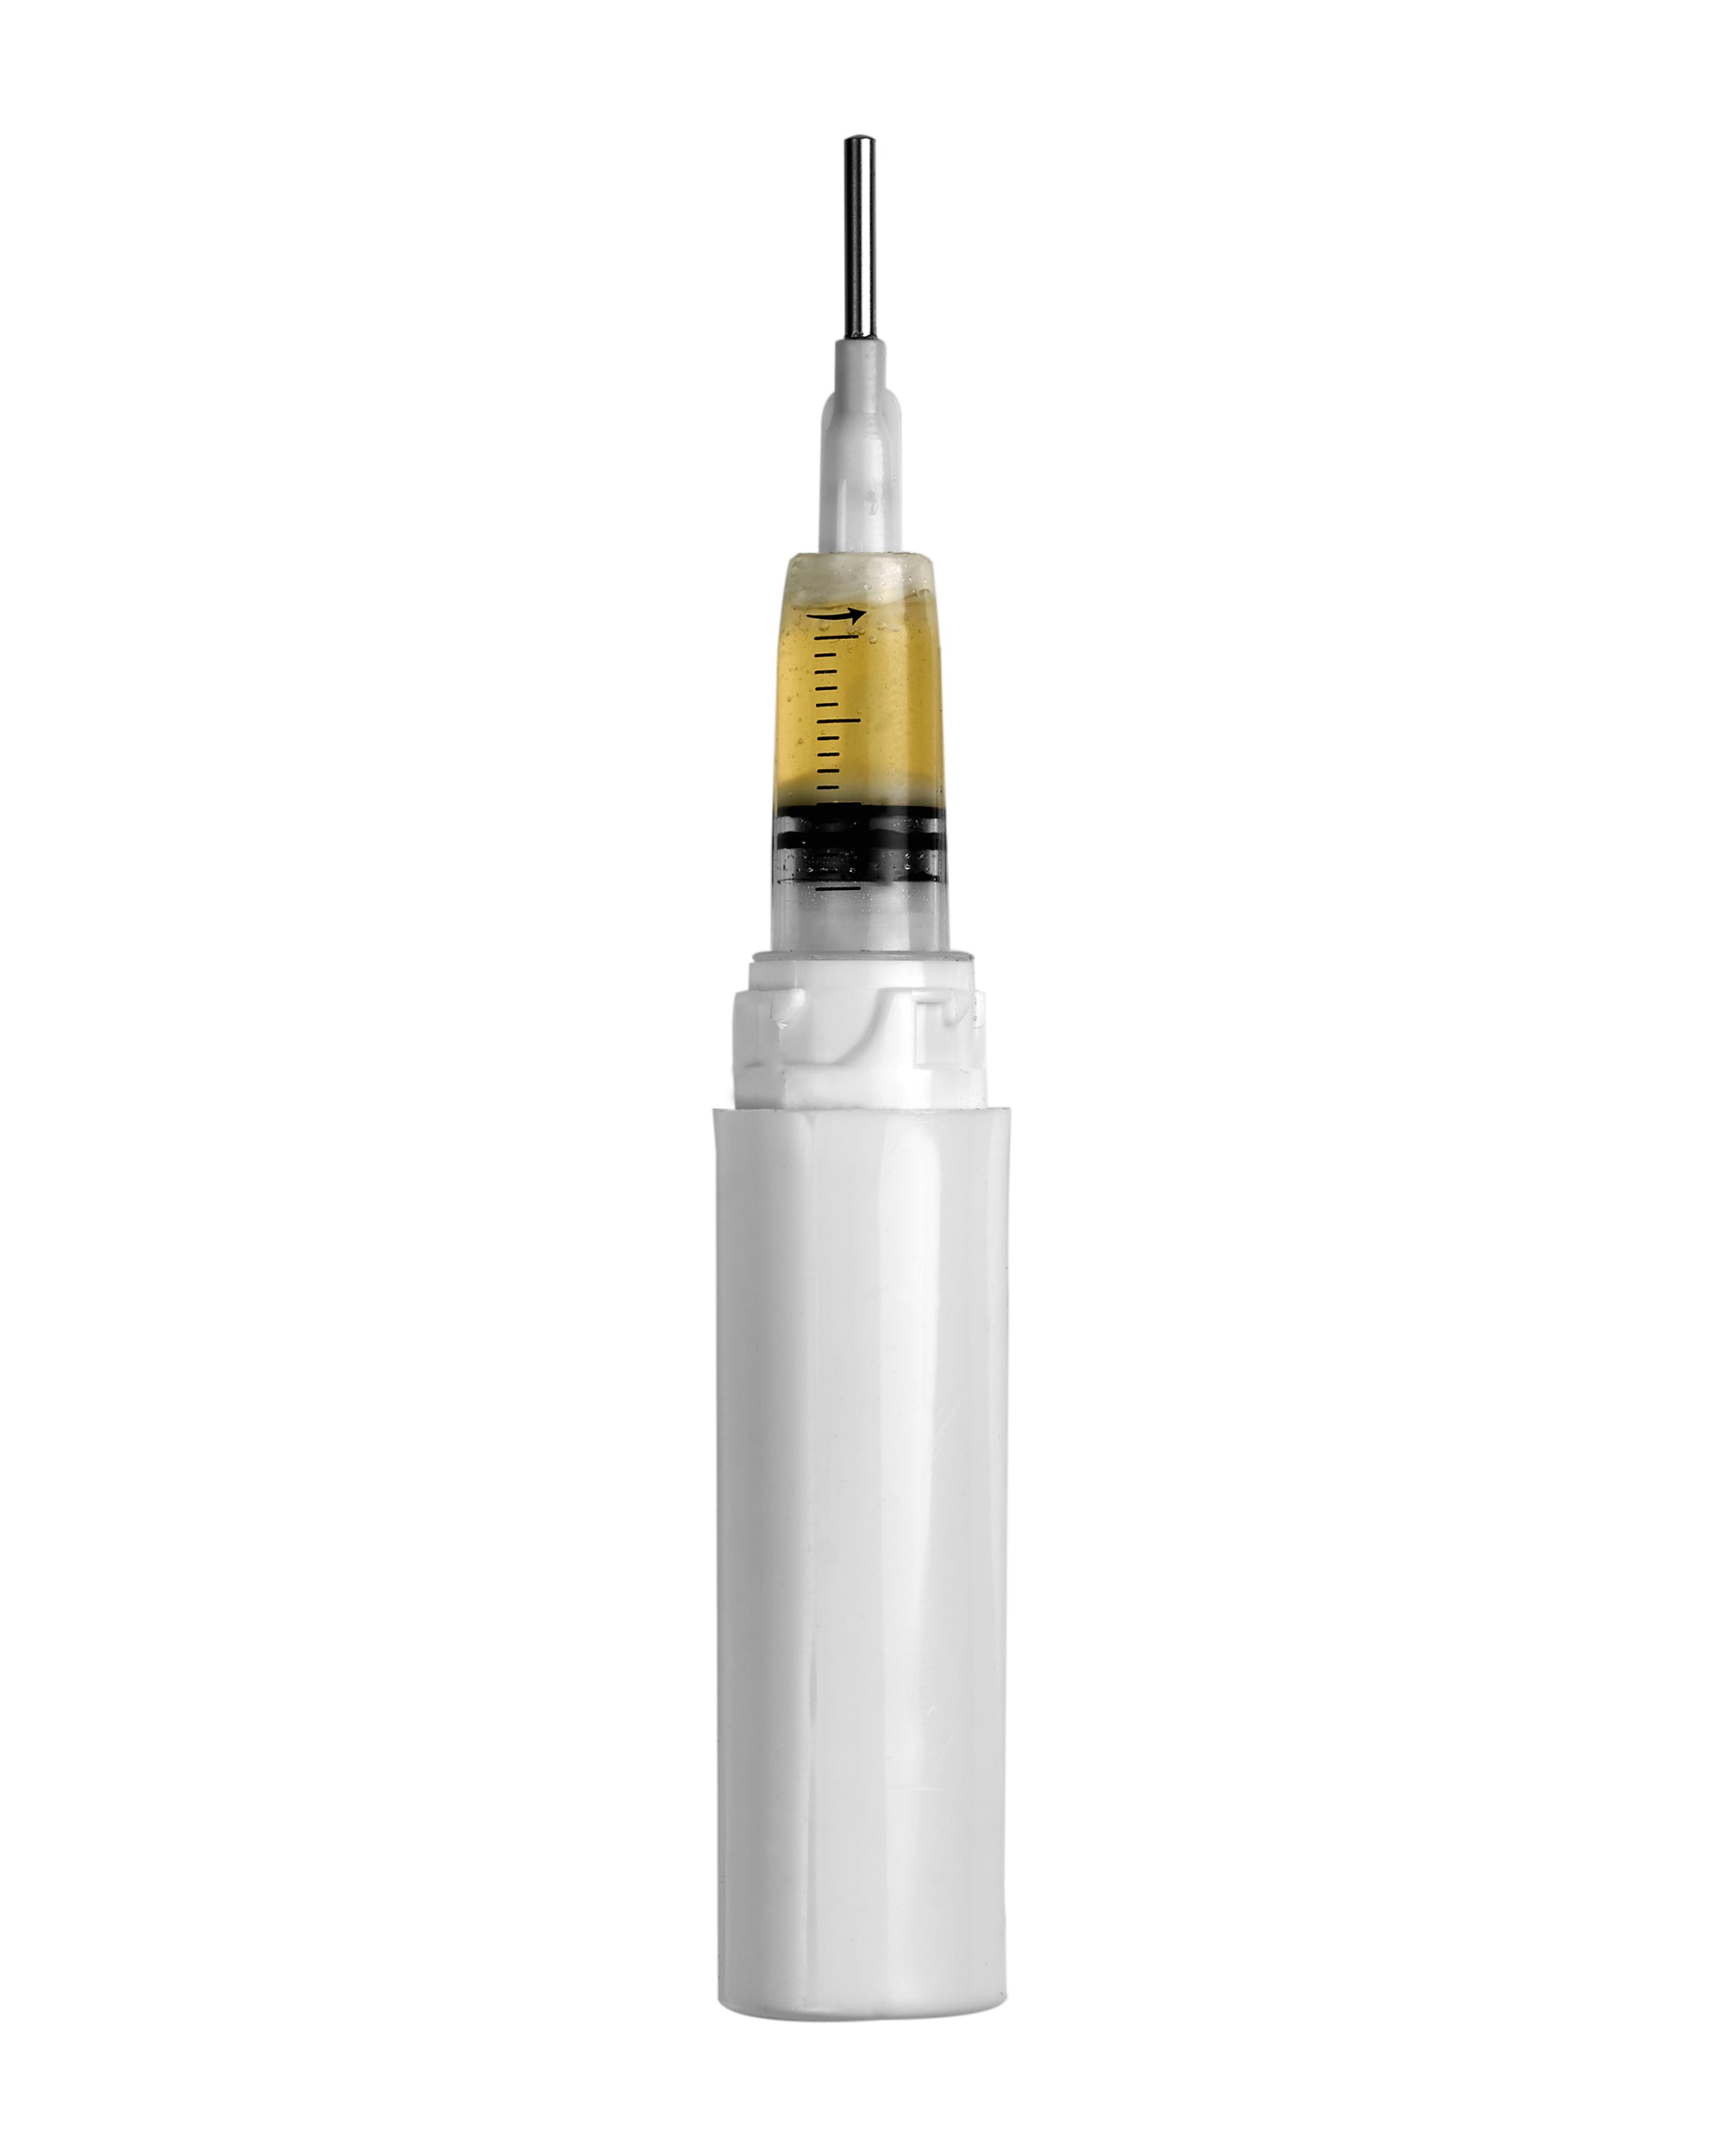 Child Resistant & Luer Lock | DymaPak Twistspenser White Plastic Dab Applicator Syringes | 1mL - 0.33mL Increments - 2